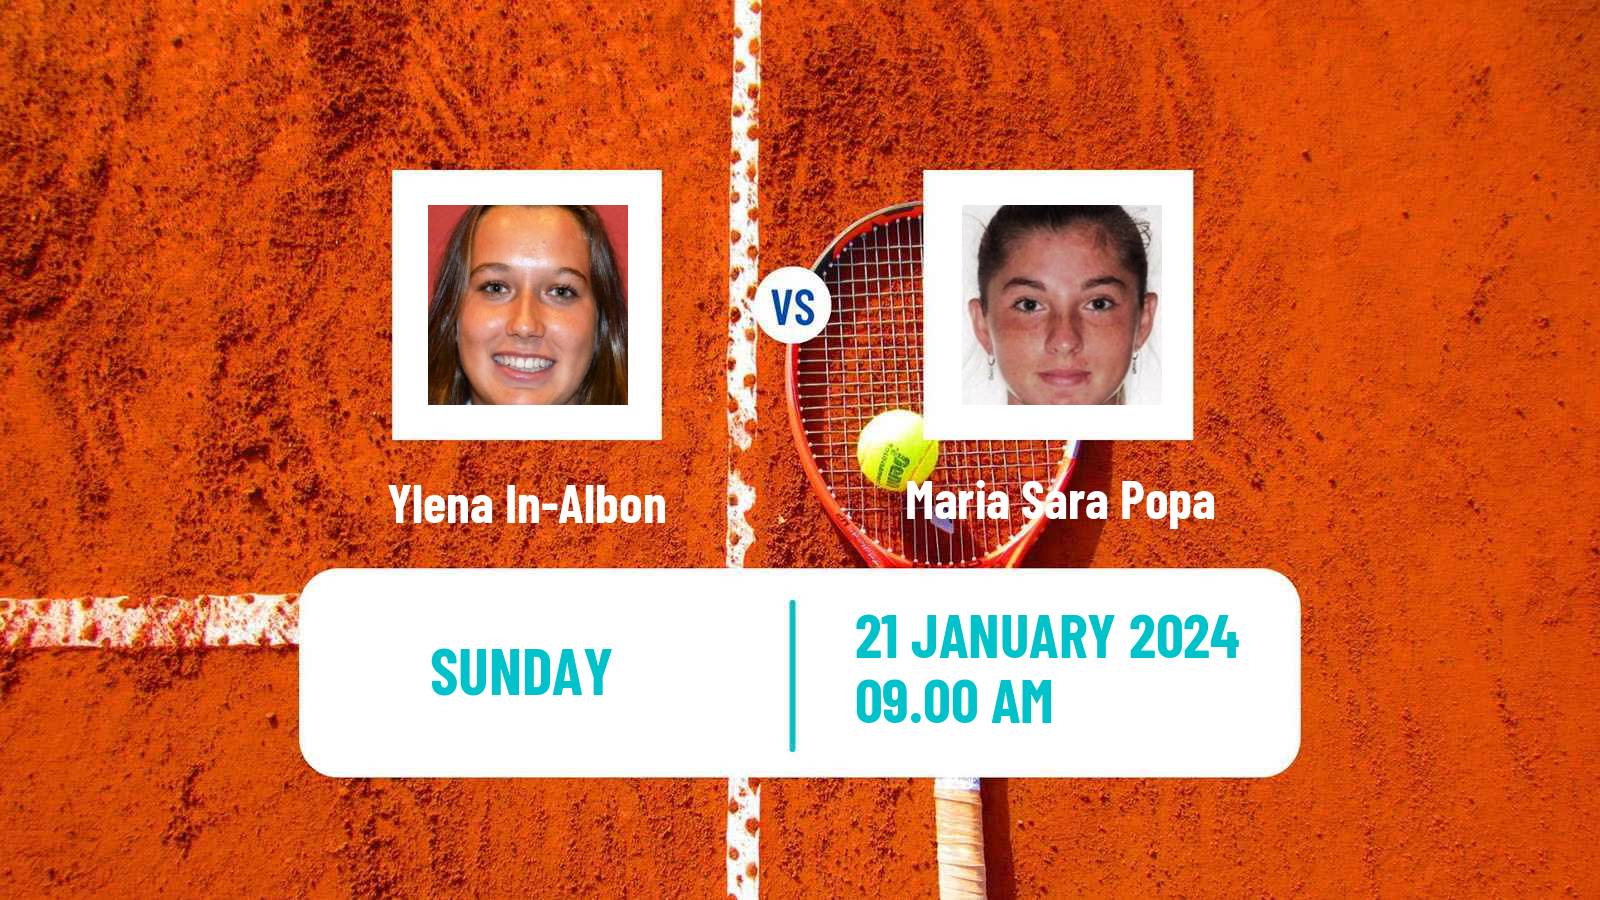 Tennis ITF W35 Buenos Aires Women Ylena In-Albon - Maria Sara Popa